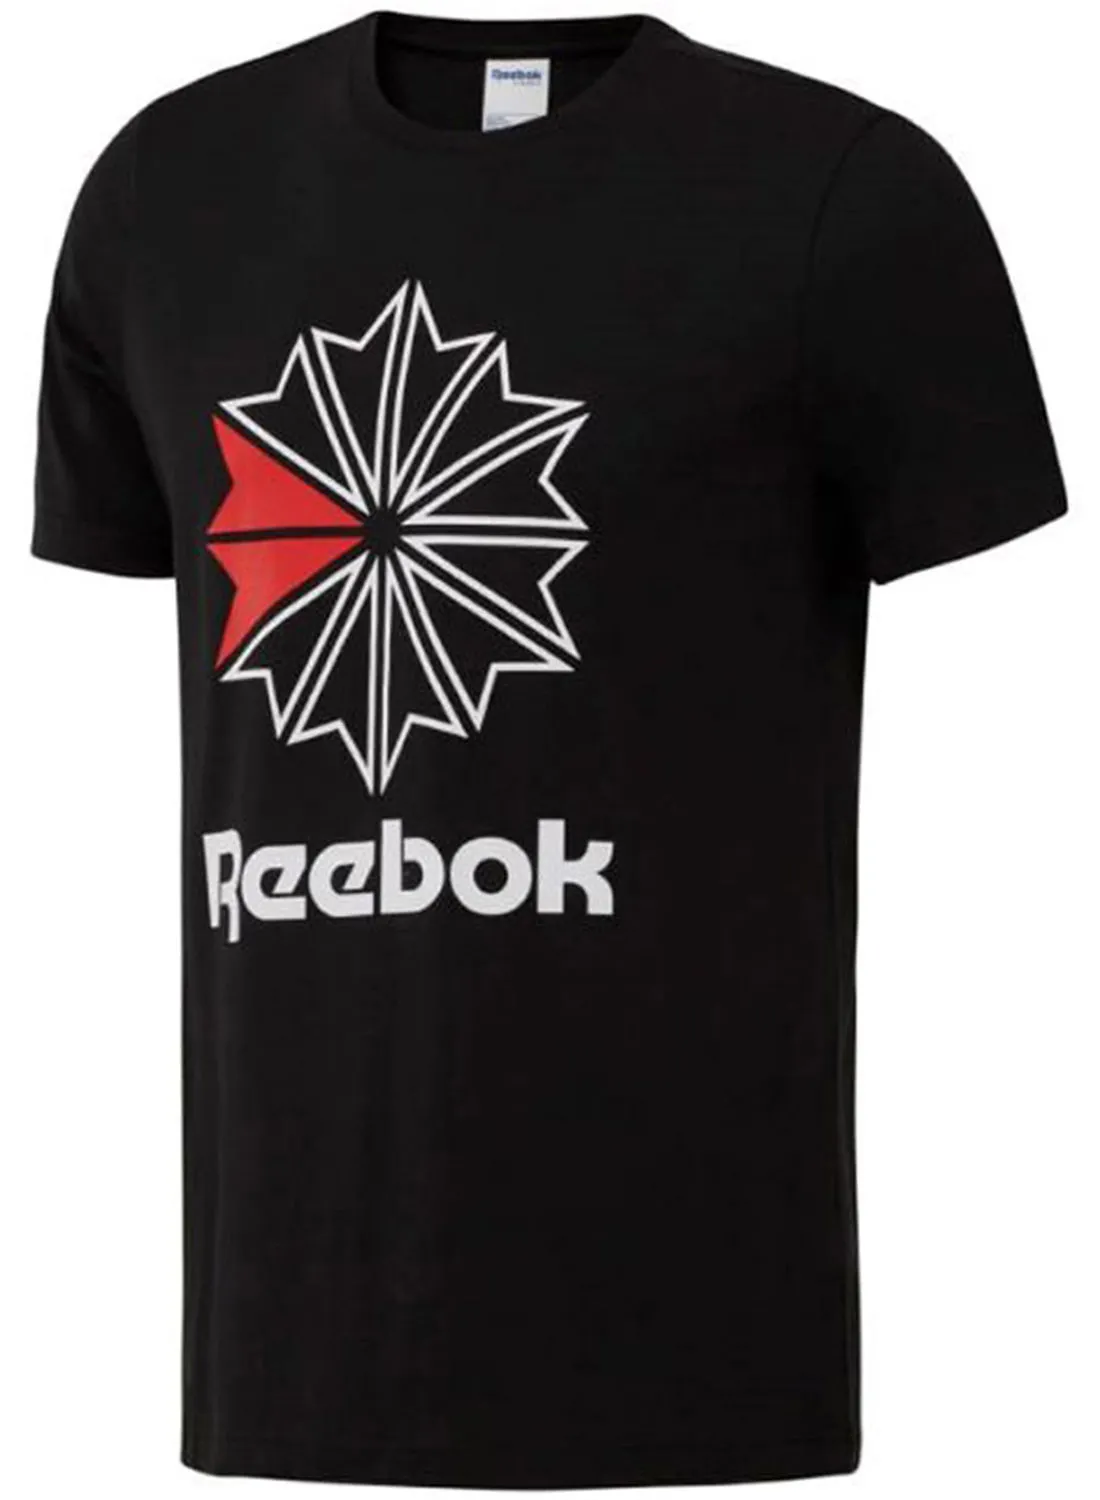 Reebok Graphic Printed T-Shirt Black/White/Red